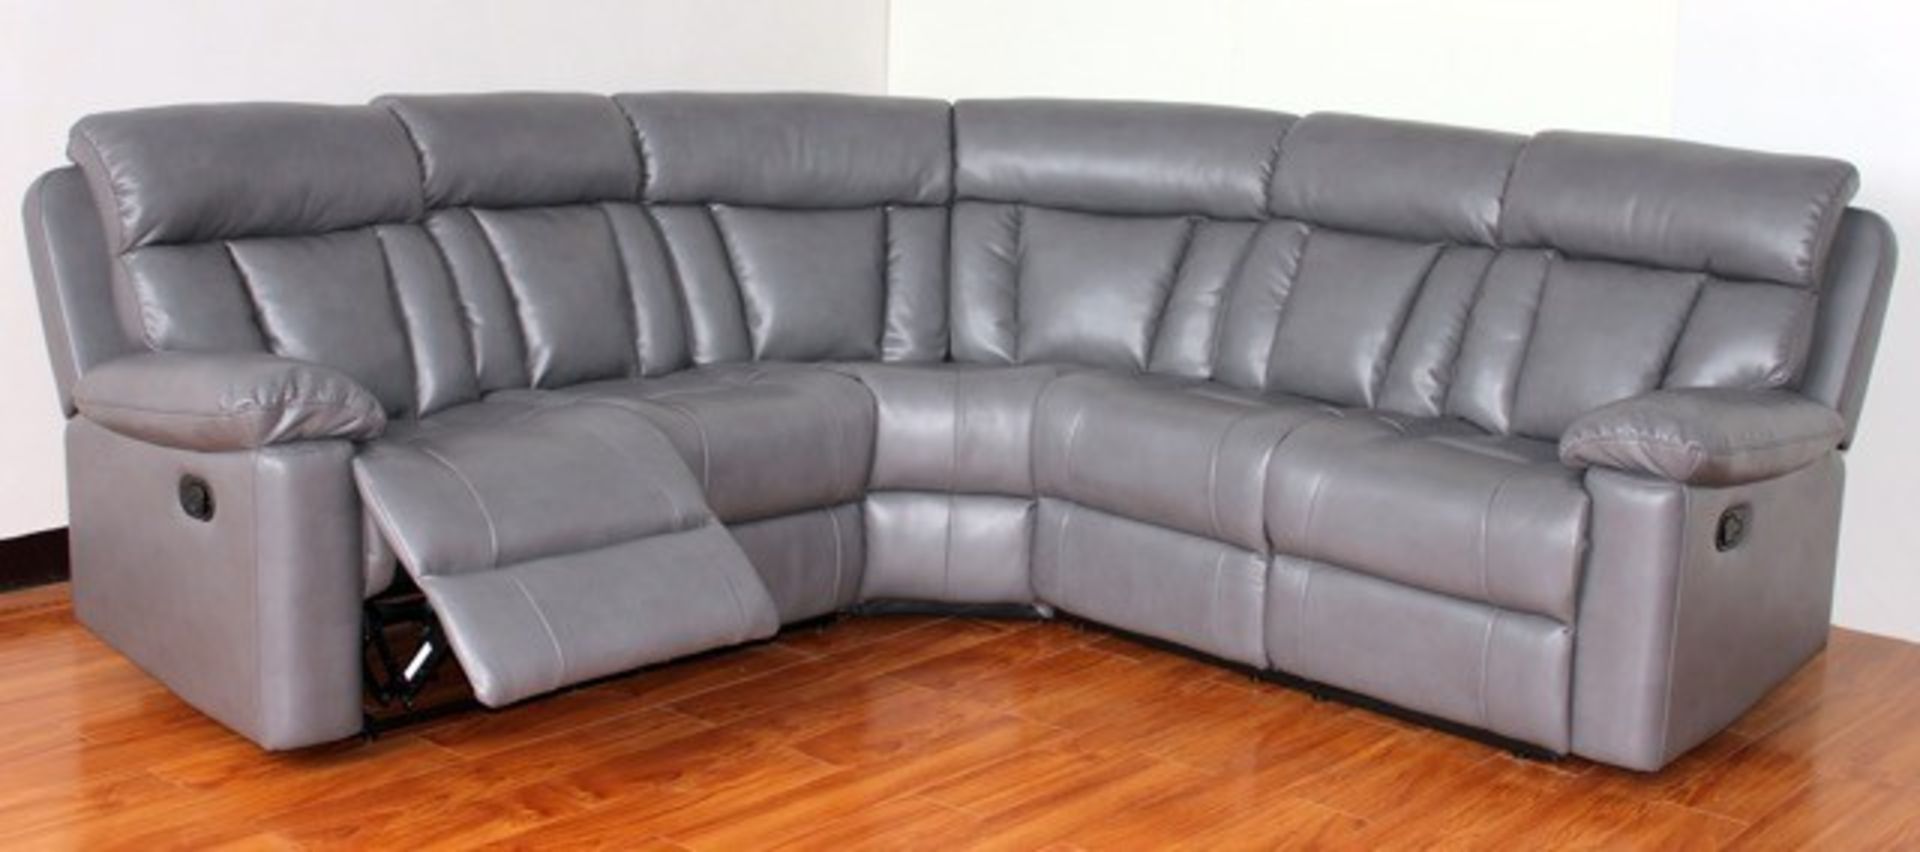 Boston grey leather reclining corner sofa